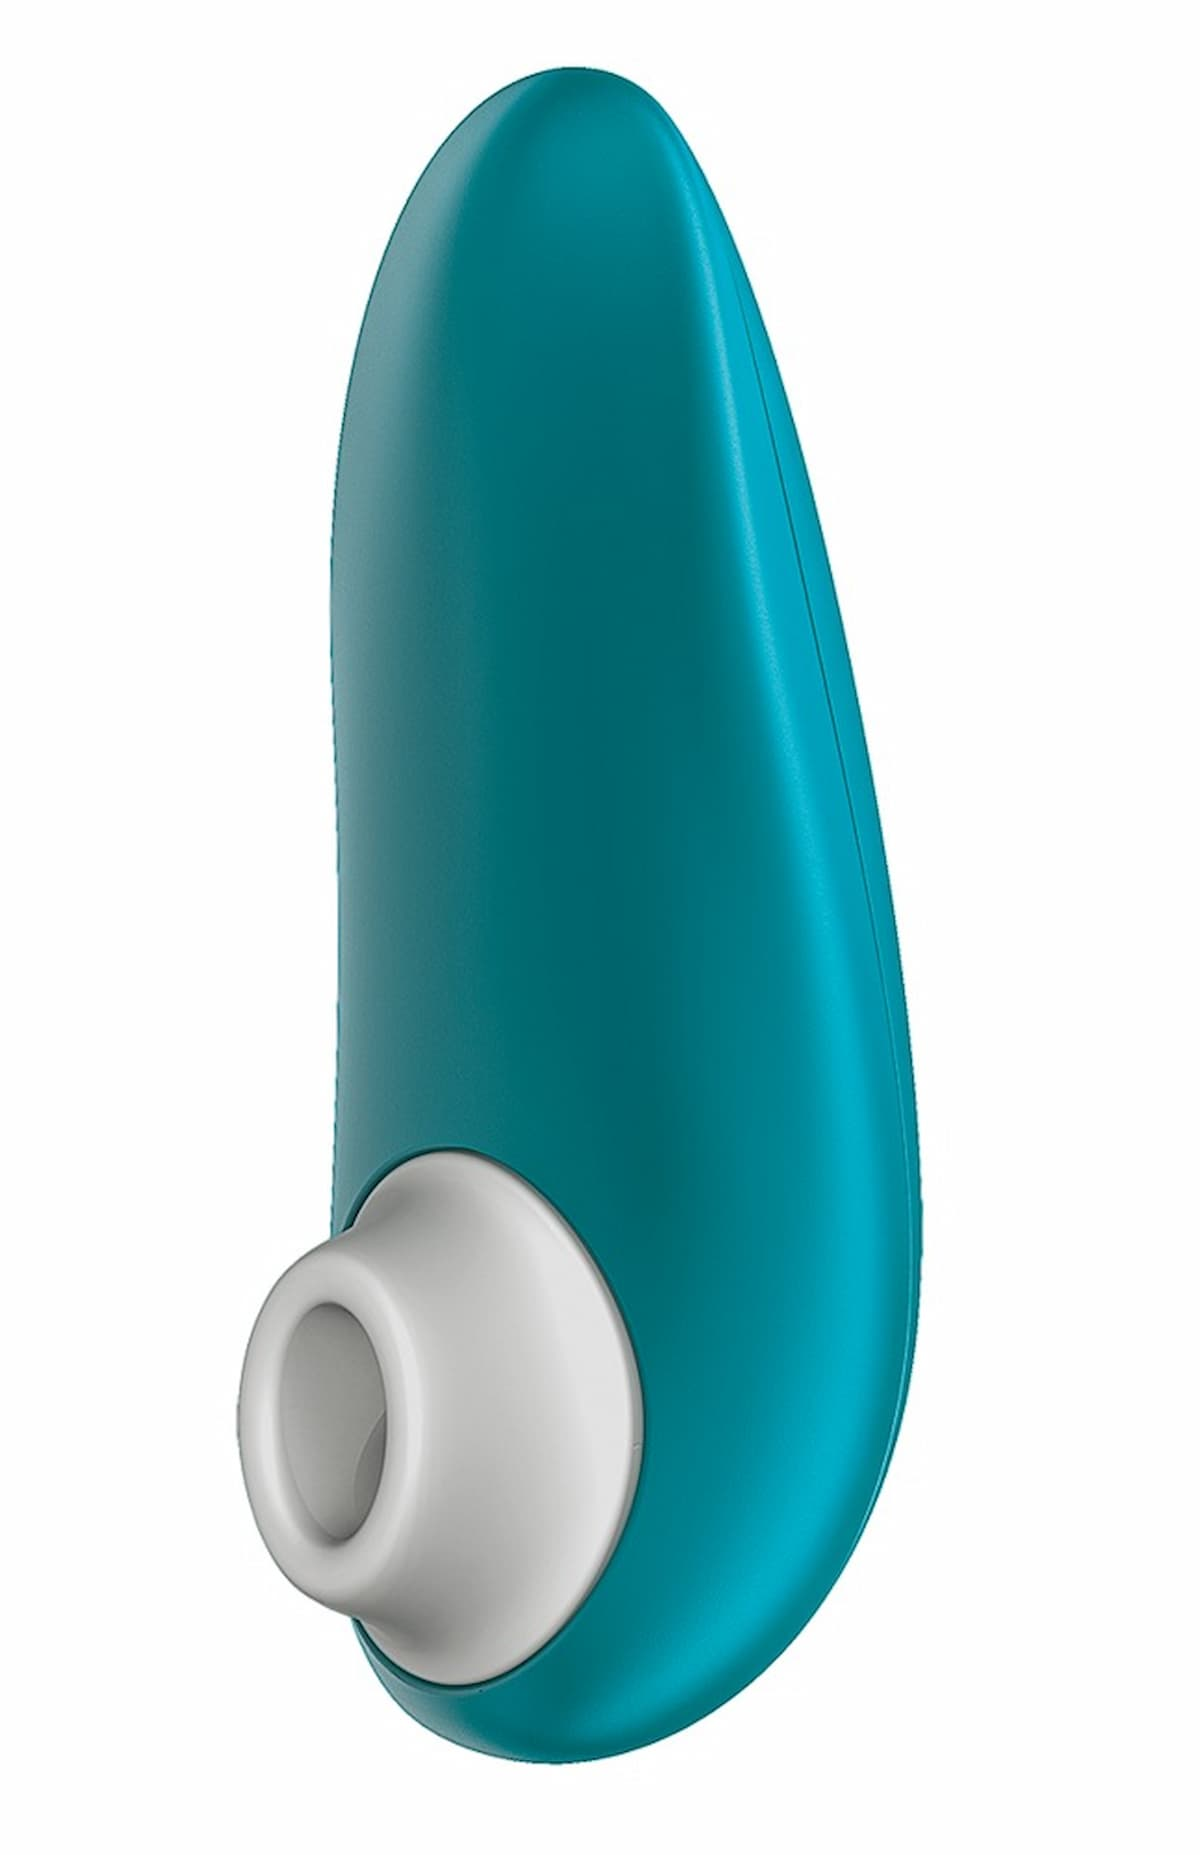 WOMANIZER Turquoise Vibrator 3 Starlet